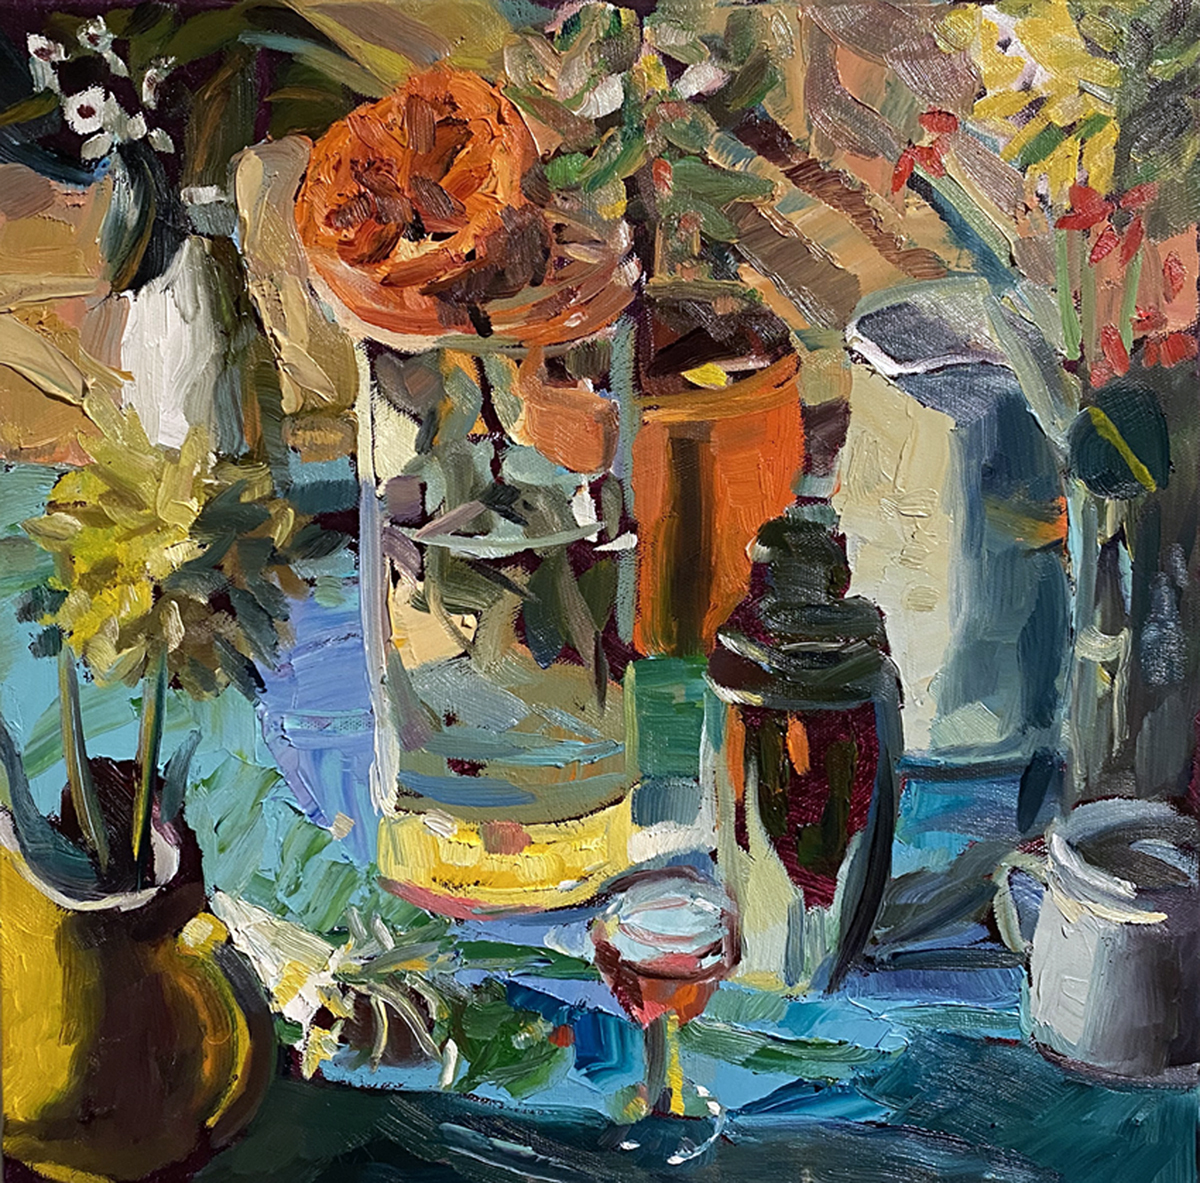 Rosemary Valadon 'Studio Table' oil on canvas 40 x 40cm $4,500